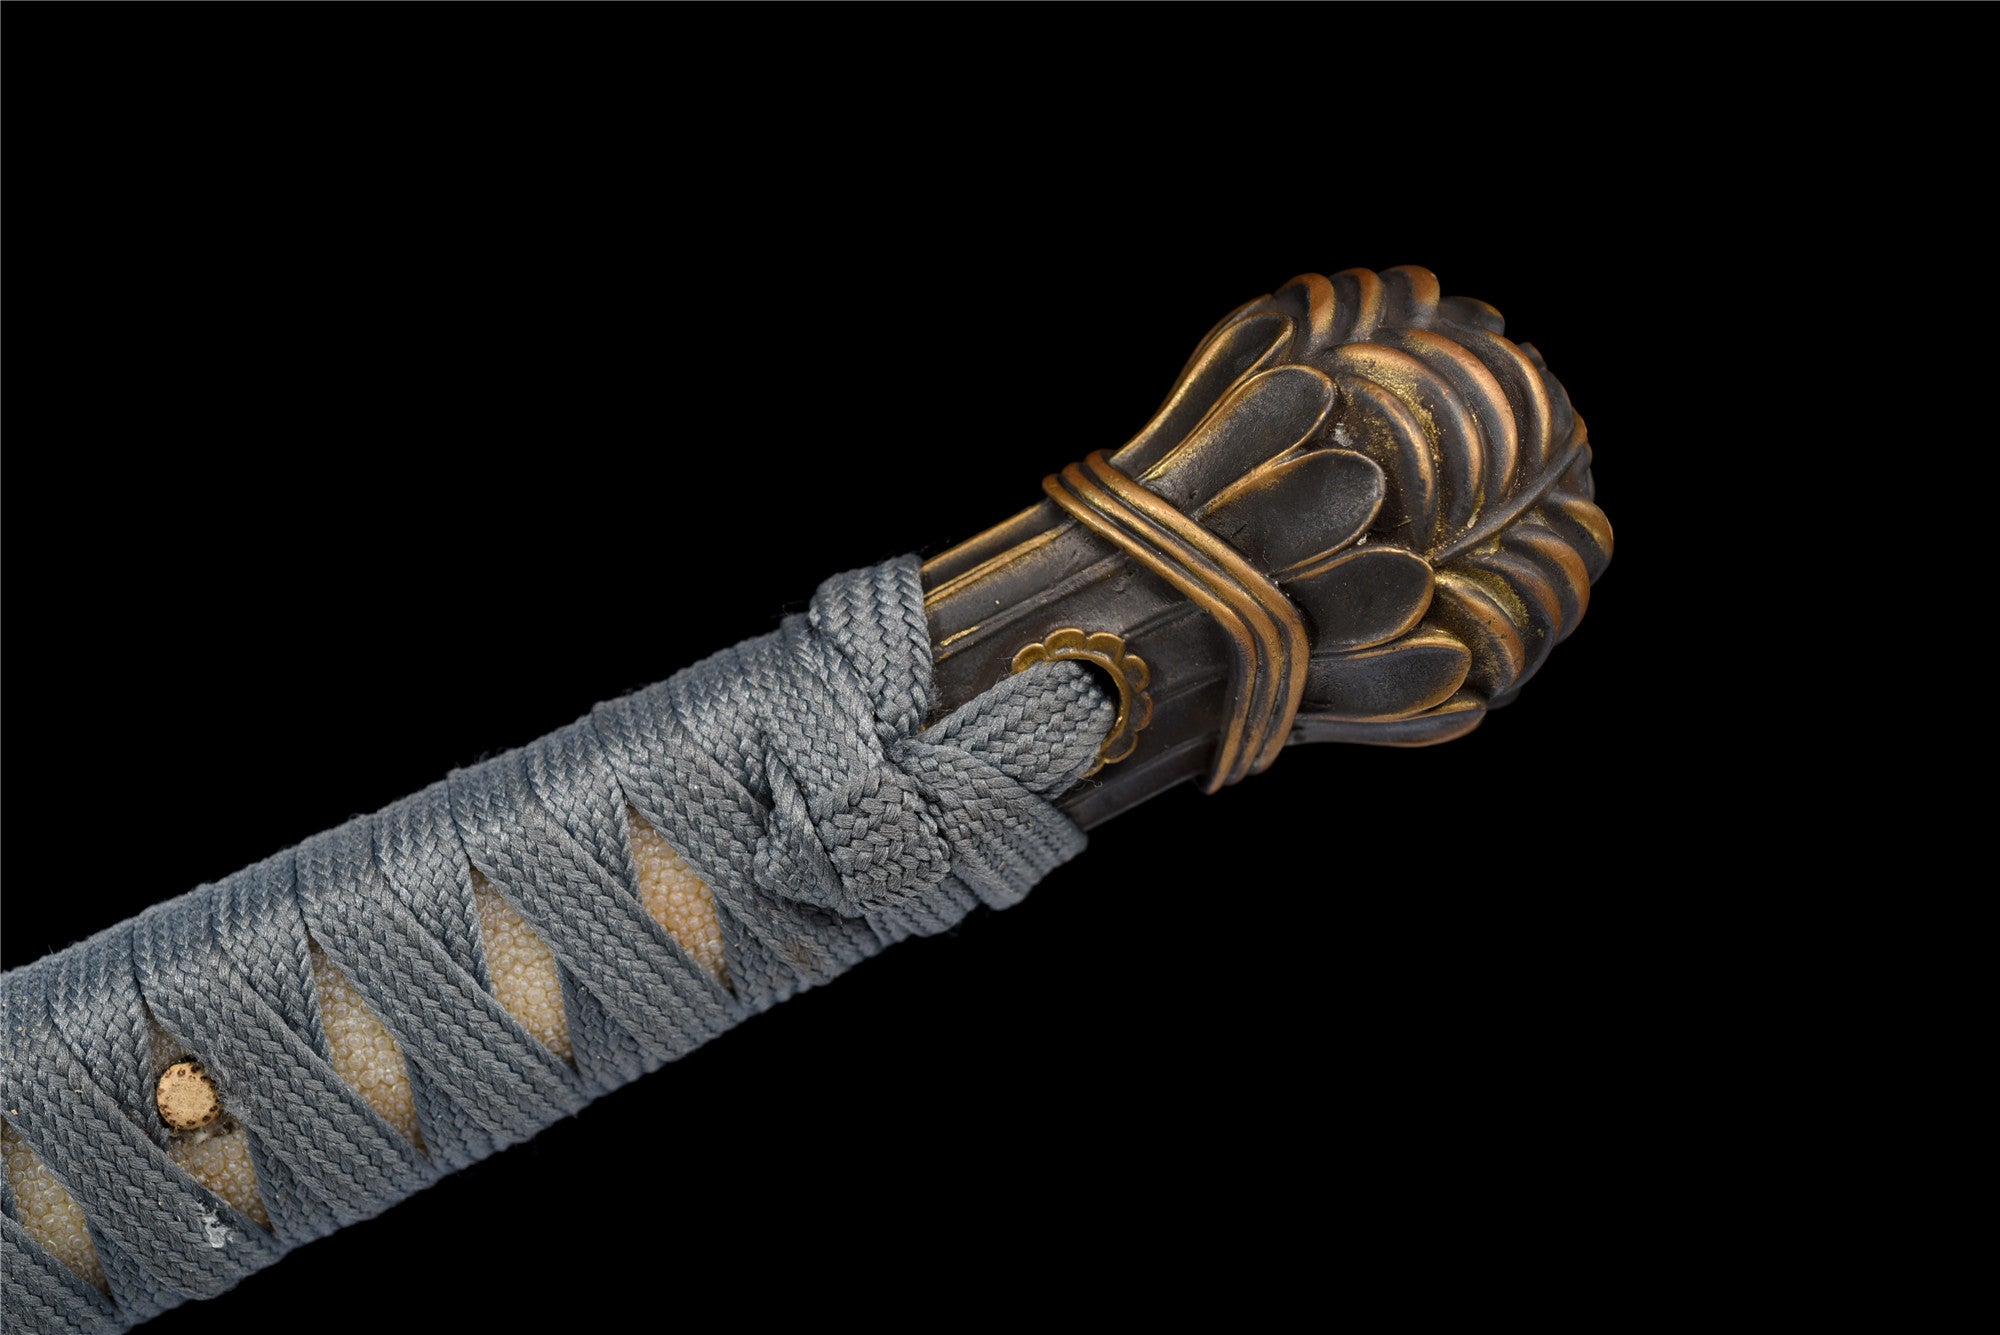 Elden Ring Moonveil Katana Sword,Real Handmade Japanese Samurai Sword,Damascus Steel,Full Tang